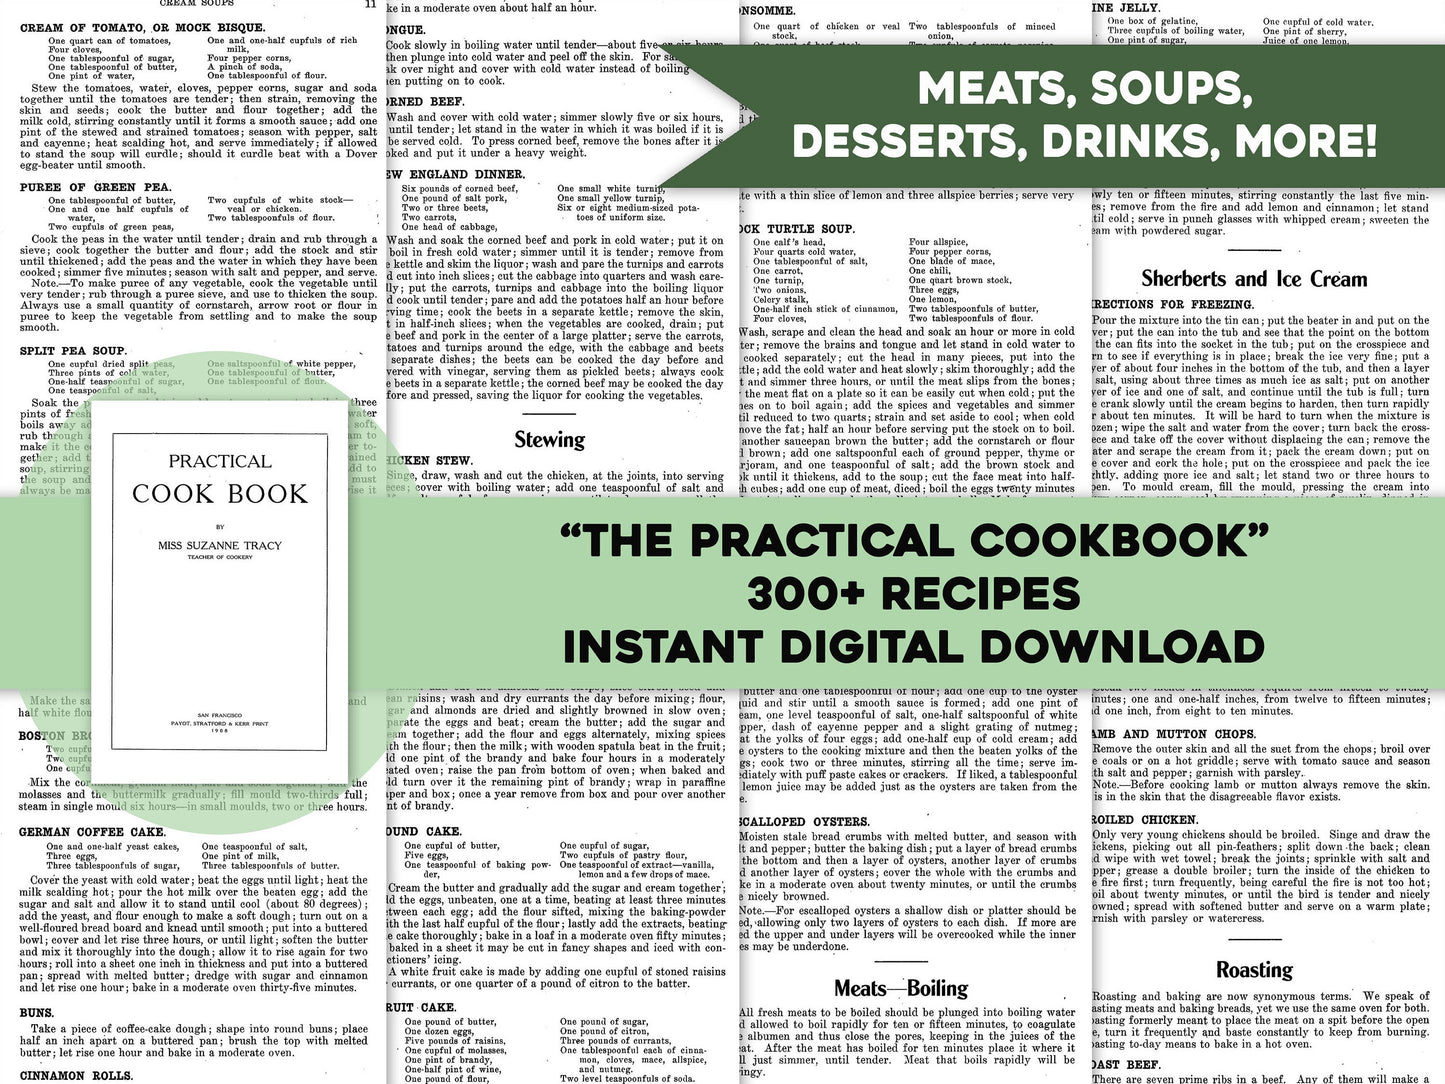 The Practical Cookbook [300+ Recipes]